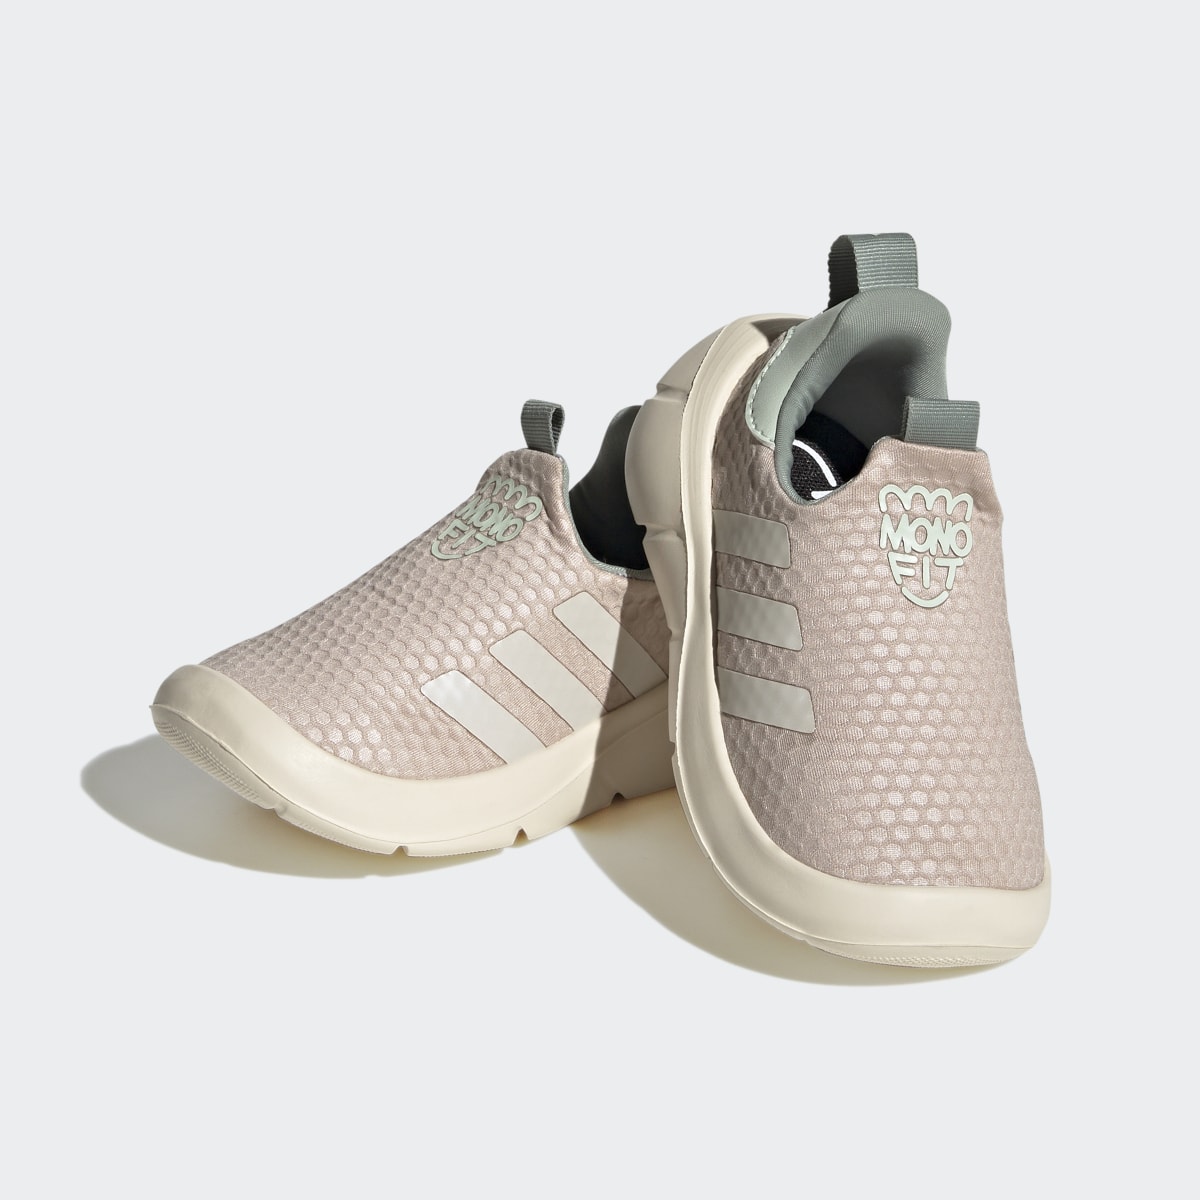 Adidas MONOFIT Slip-On Shoes. 5